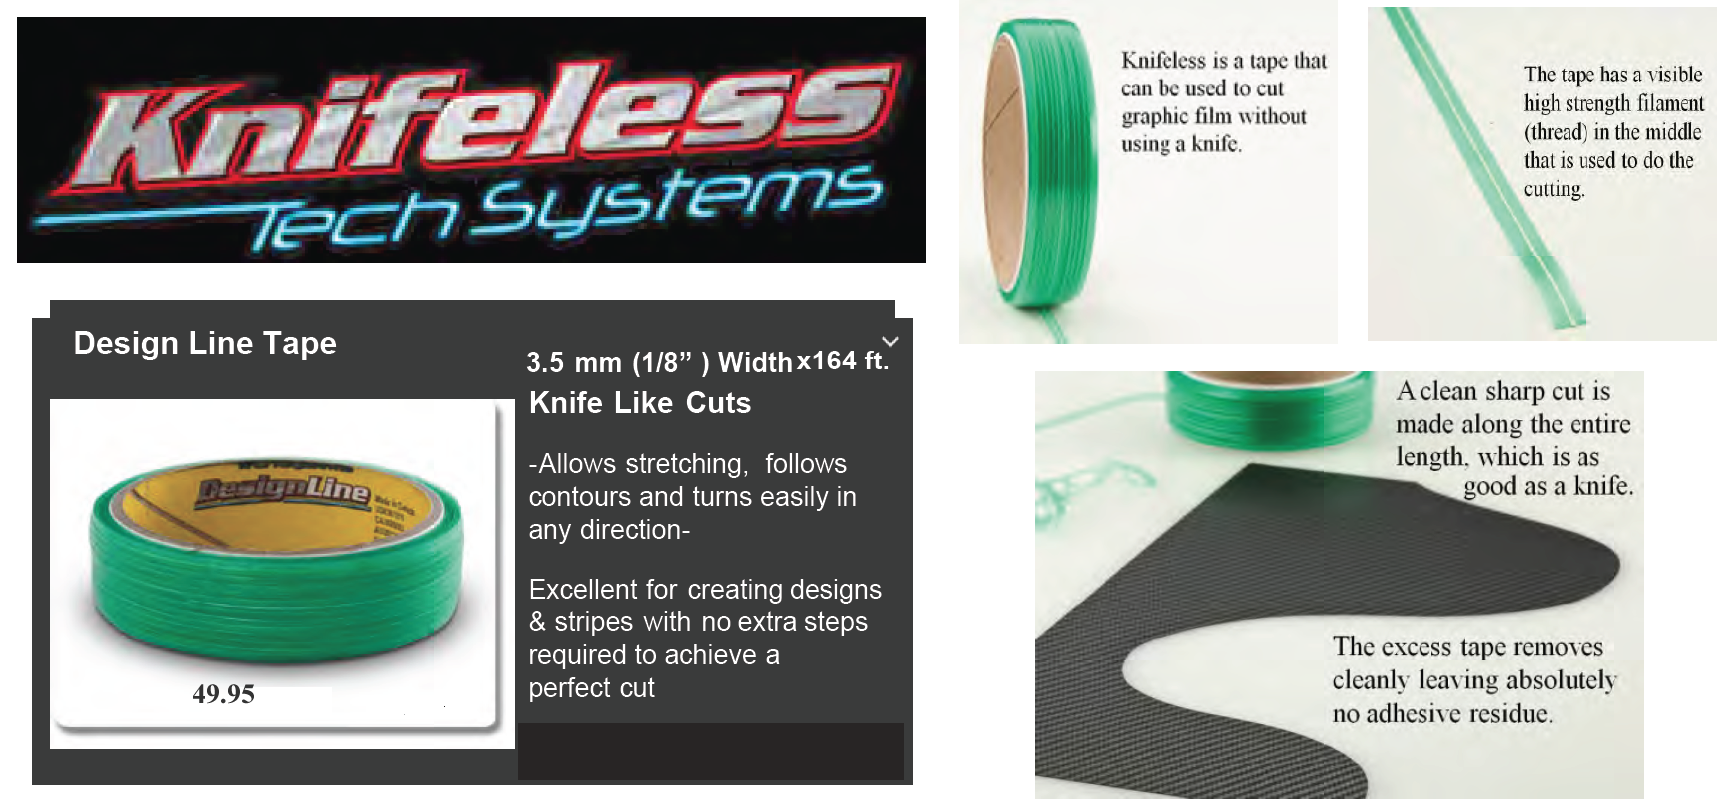 Tape knifeless instructions 1 3 - Knifeless Tape